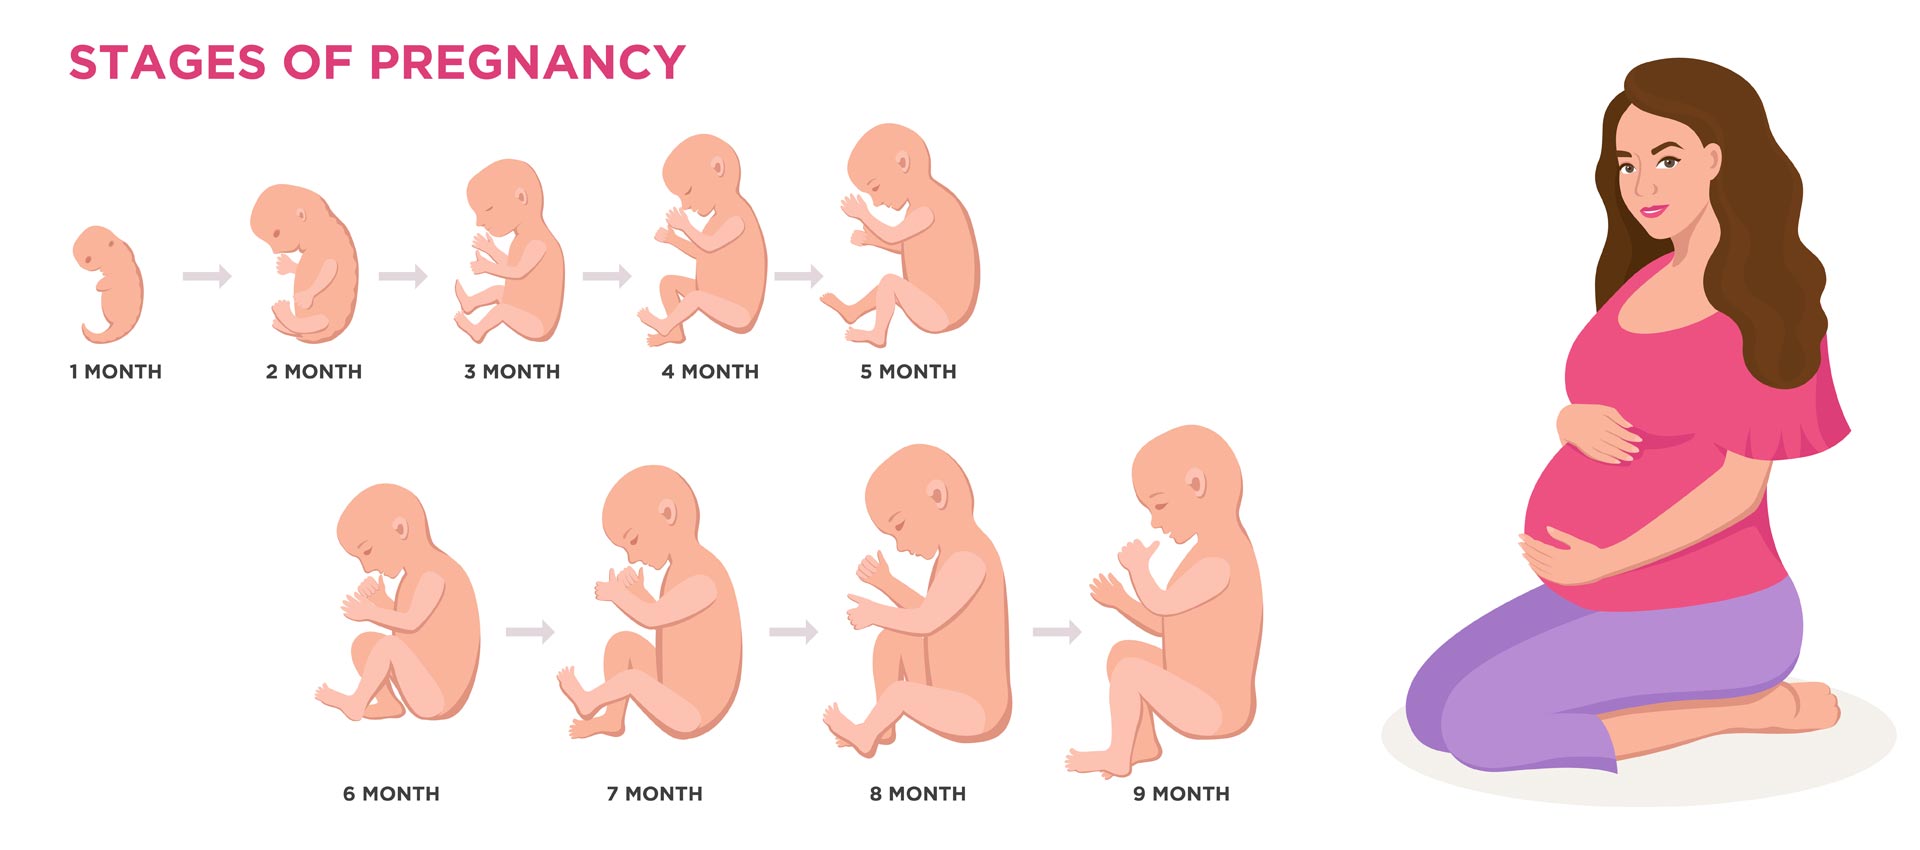 Baby Development 15-20 Weeks